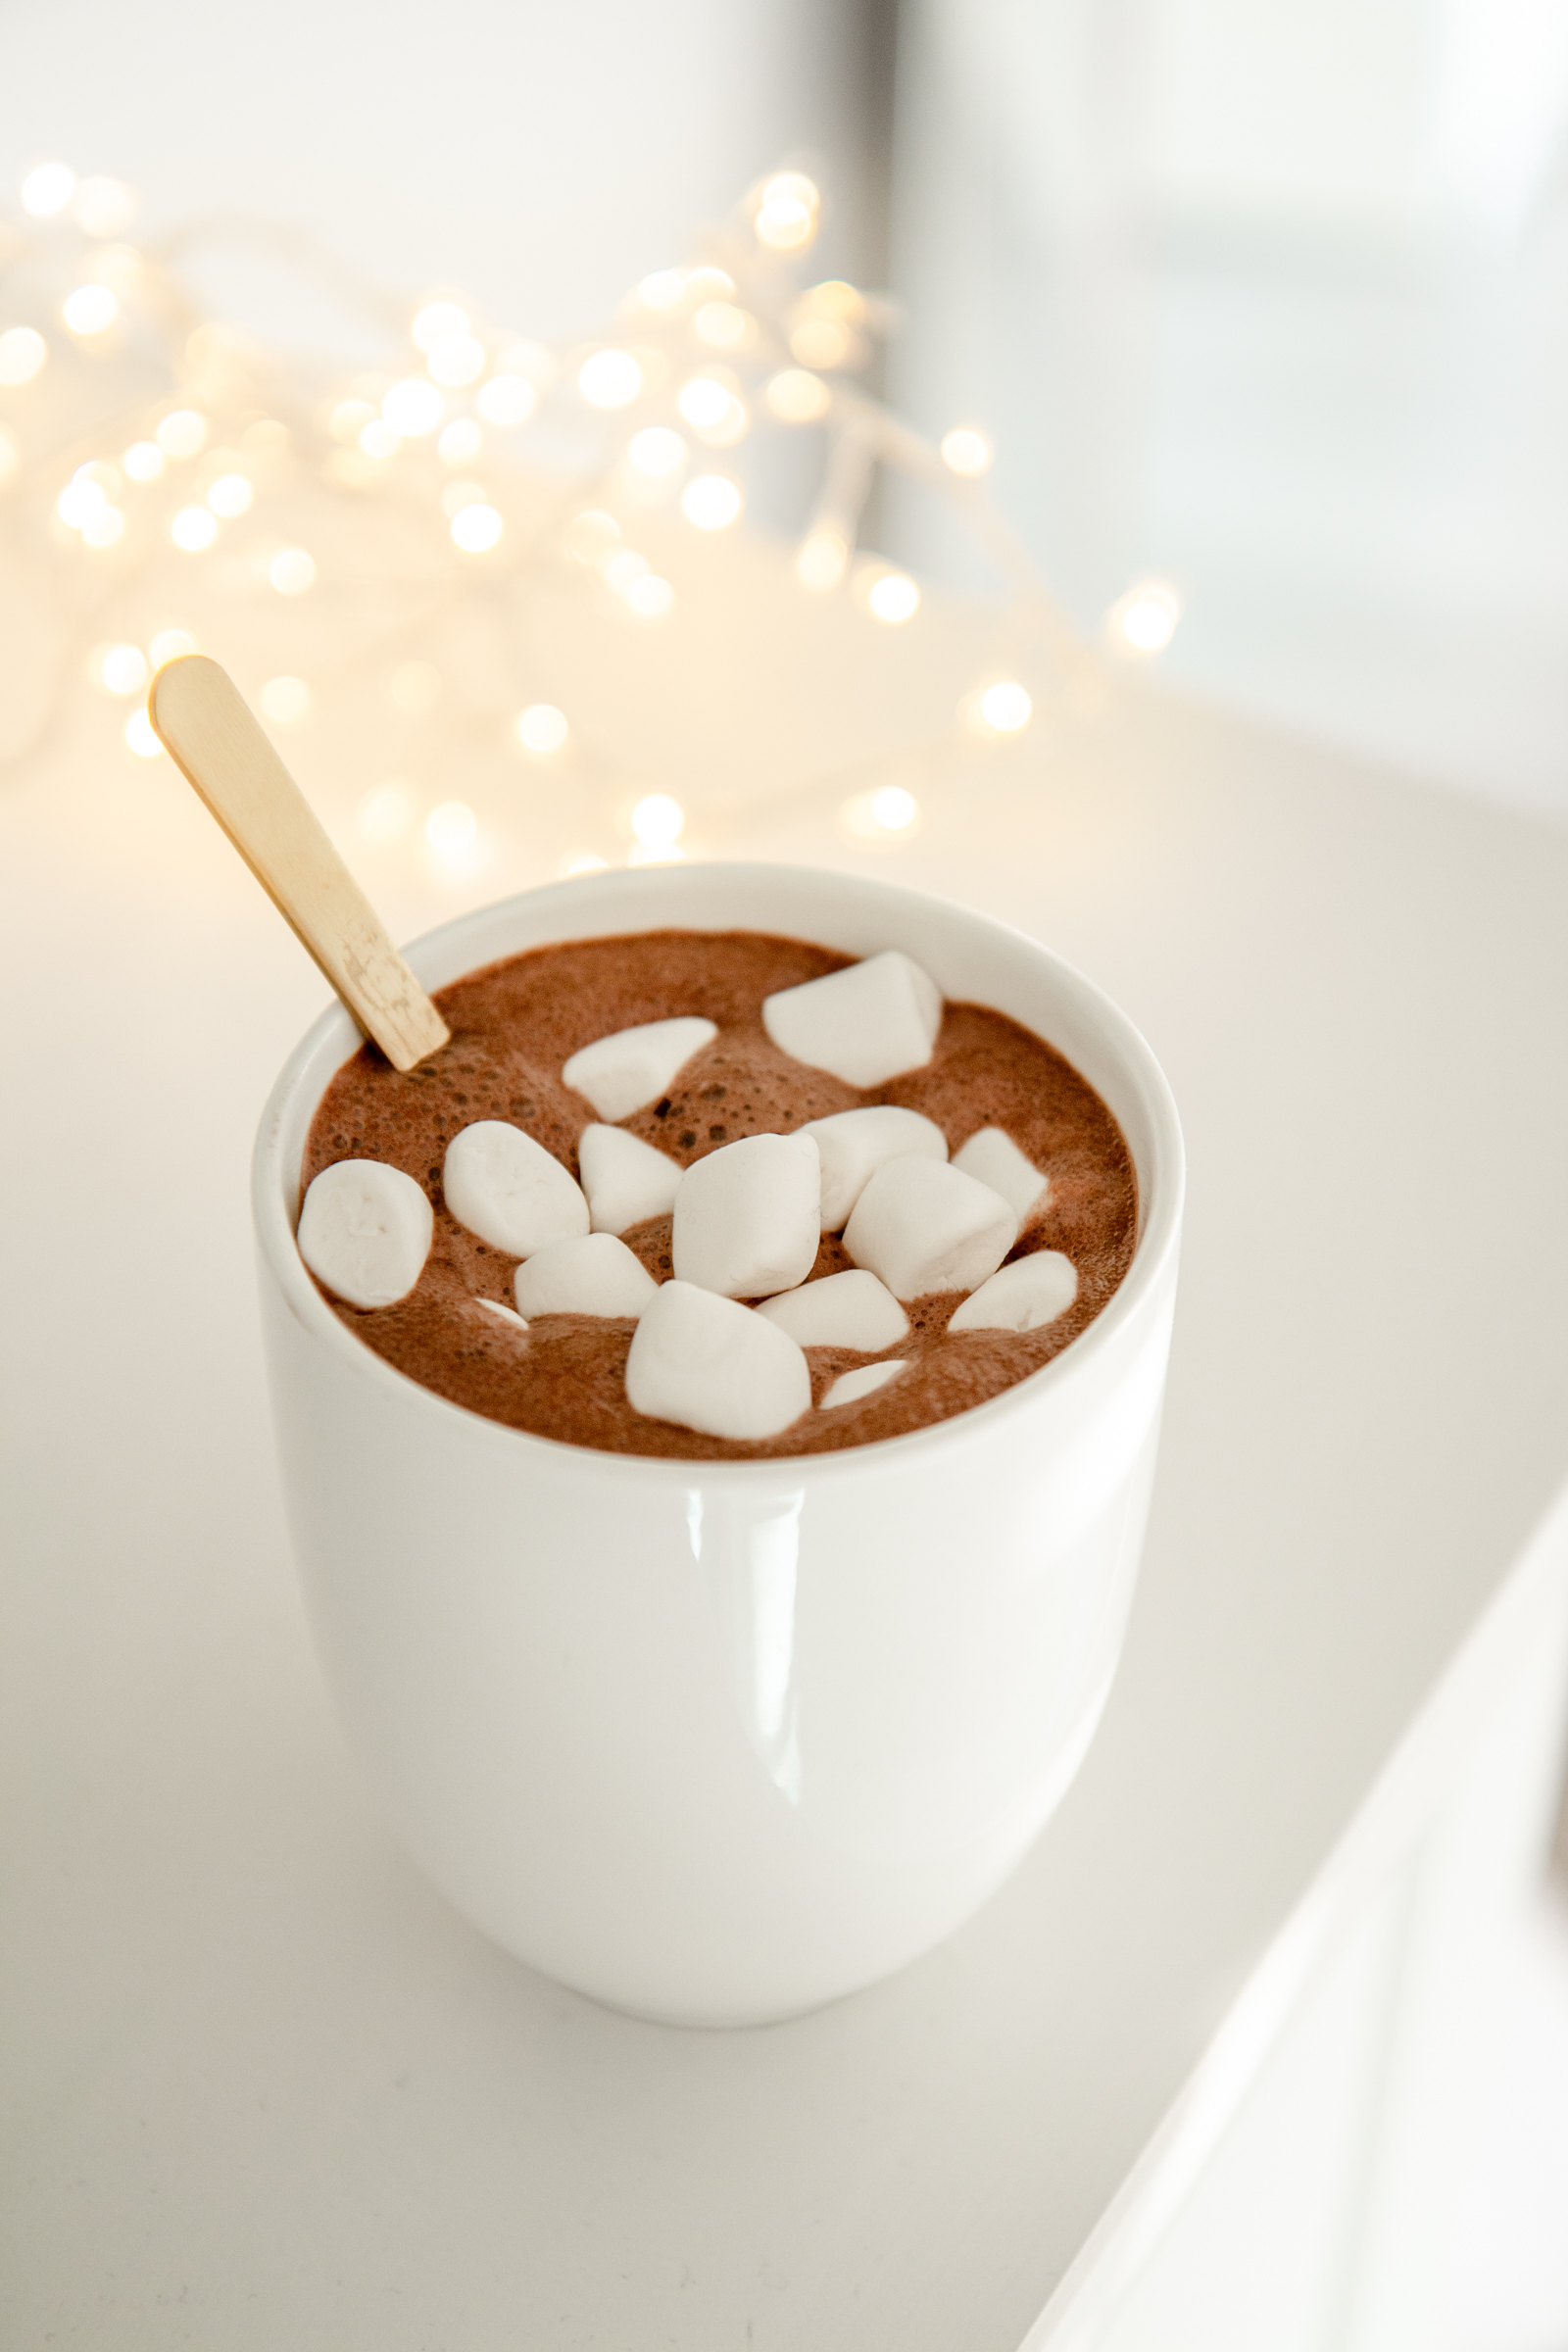 https://alice-esmeralda.com/wp-content/uploads/2018/11/Vegan-hot-chocolate-chocolat-chaud-14.jpg